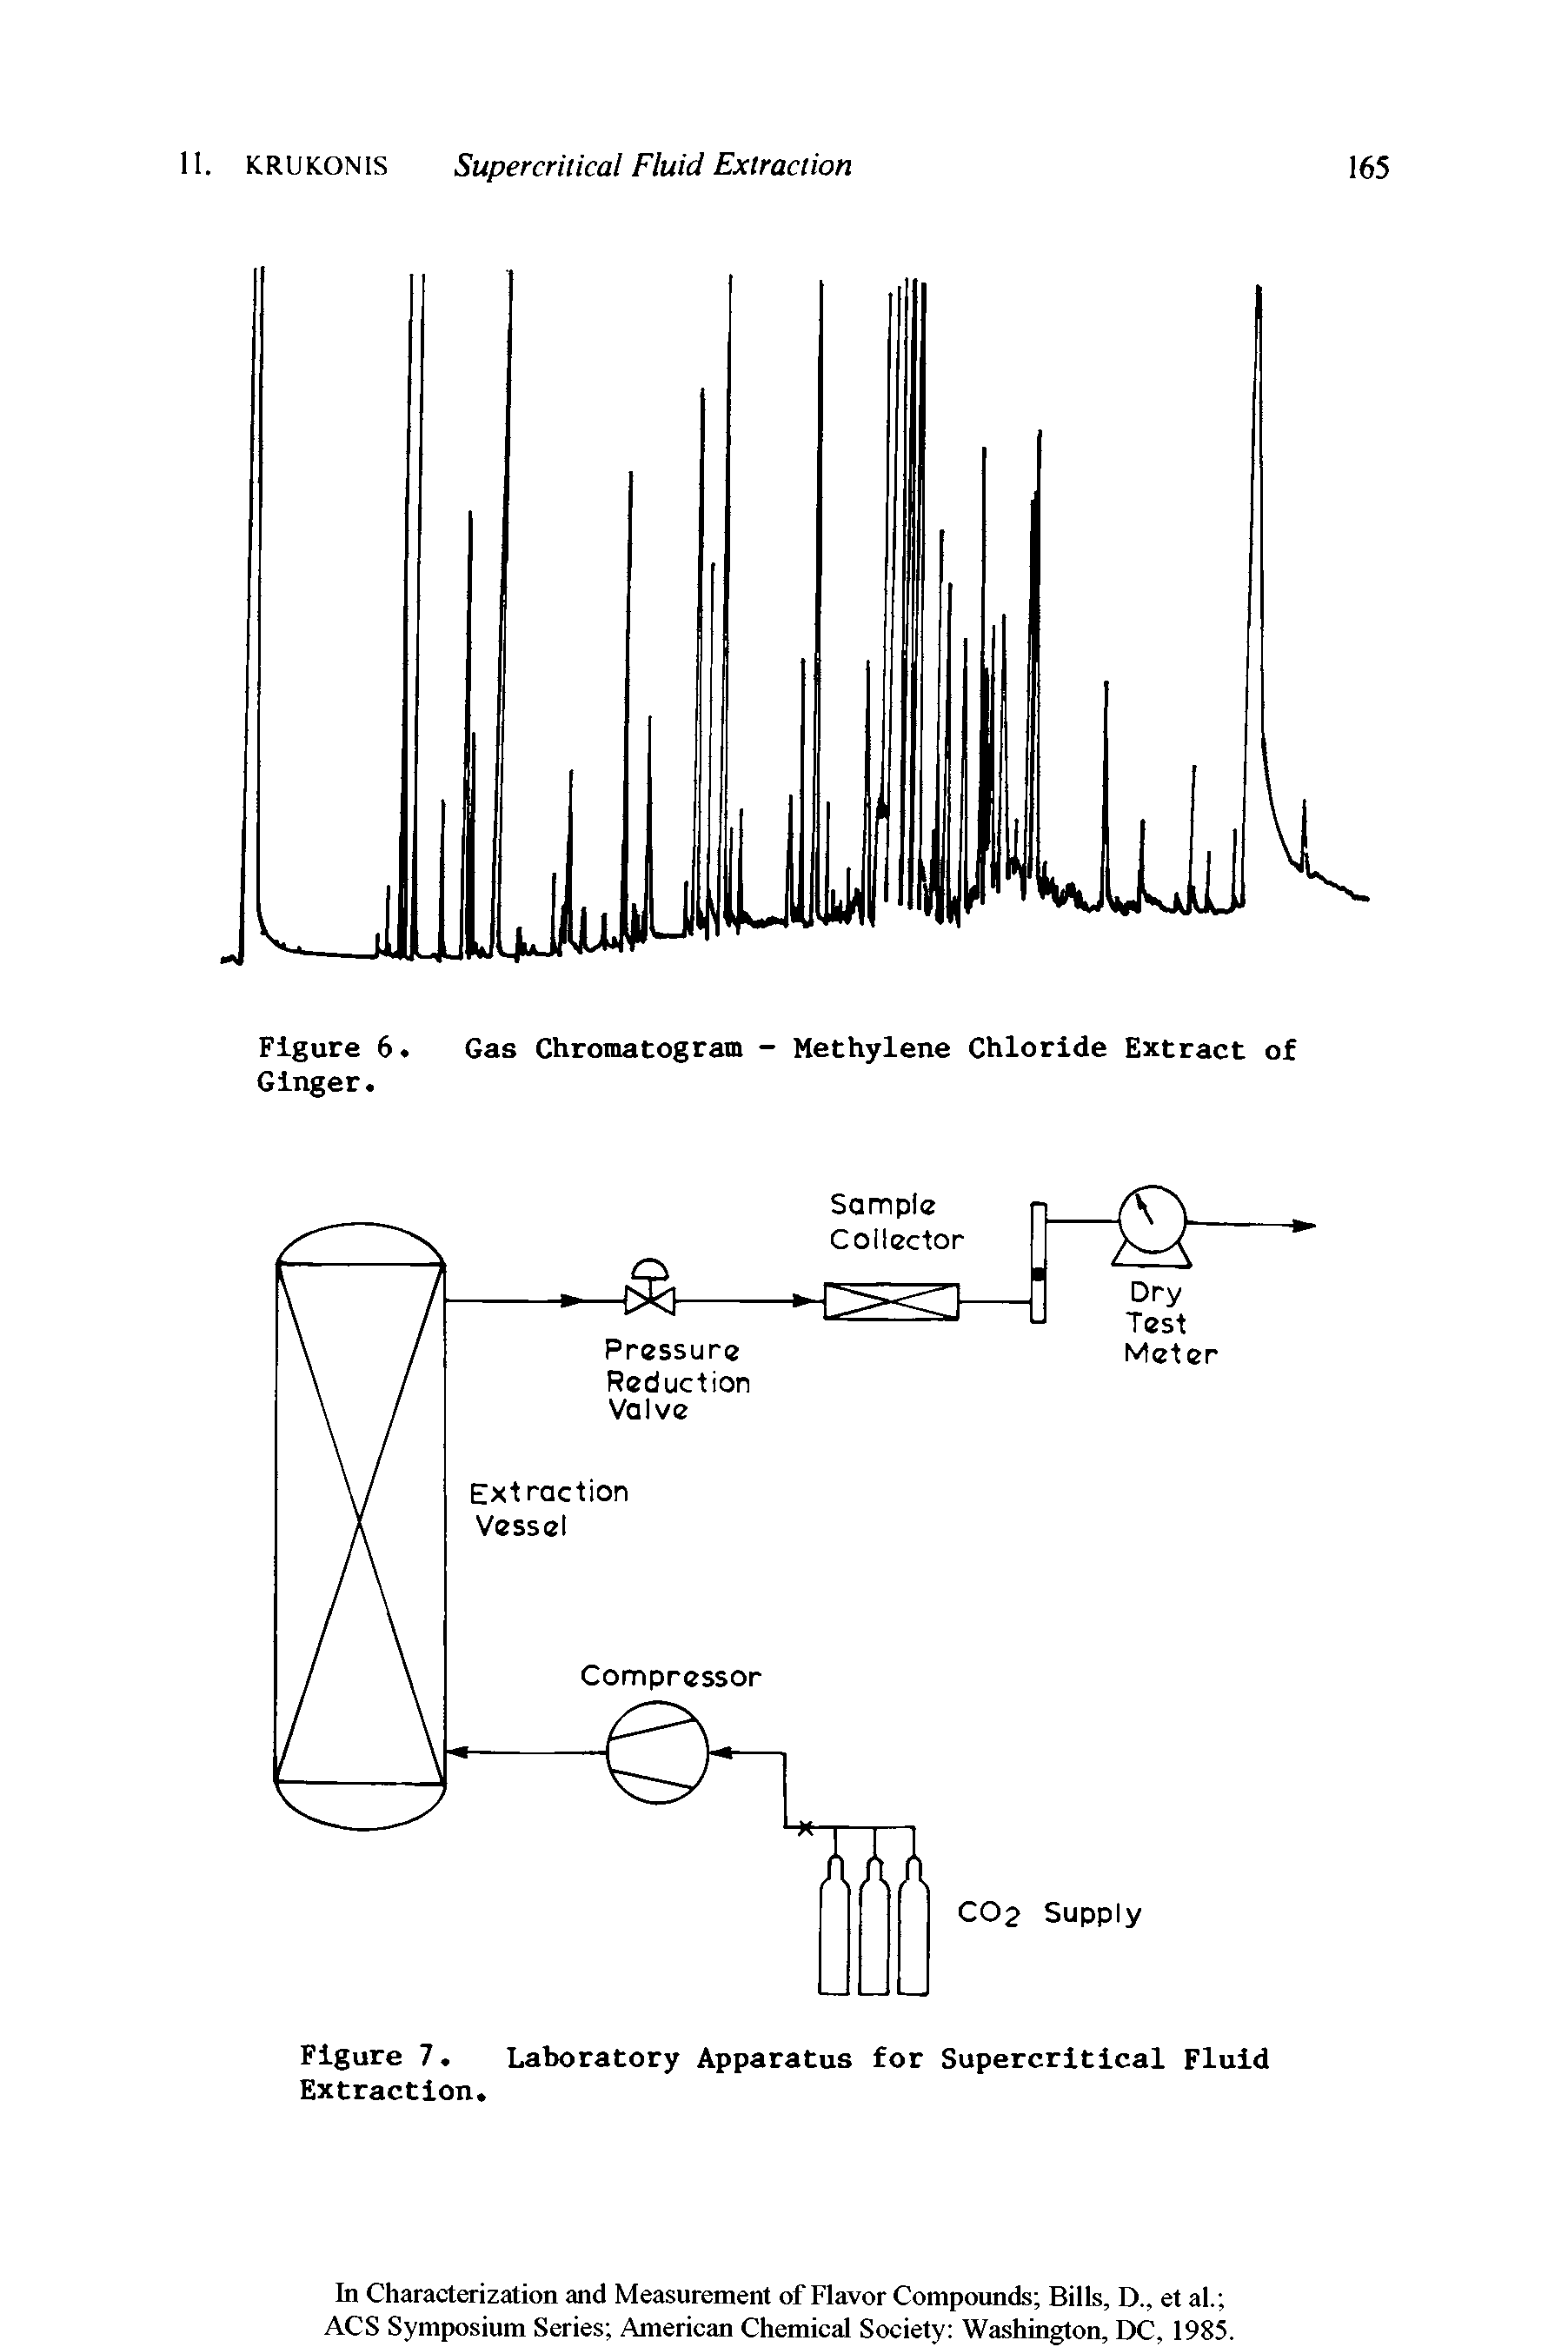 Figure 7. Laboratory Apparatus for Supercritical Fluid Extraction.